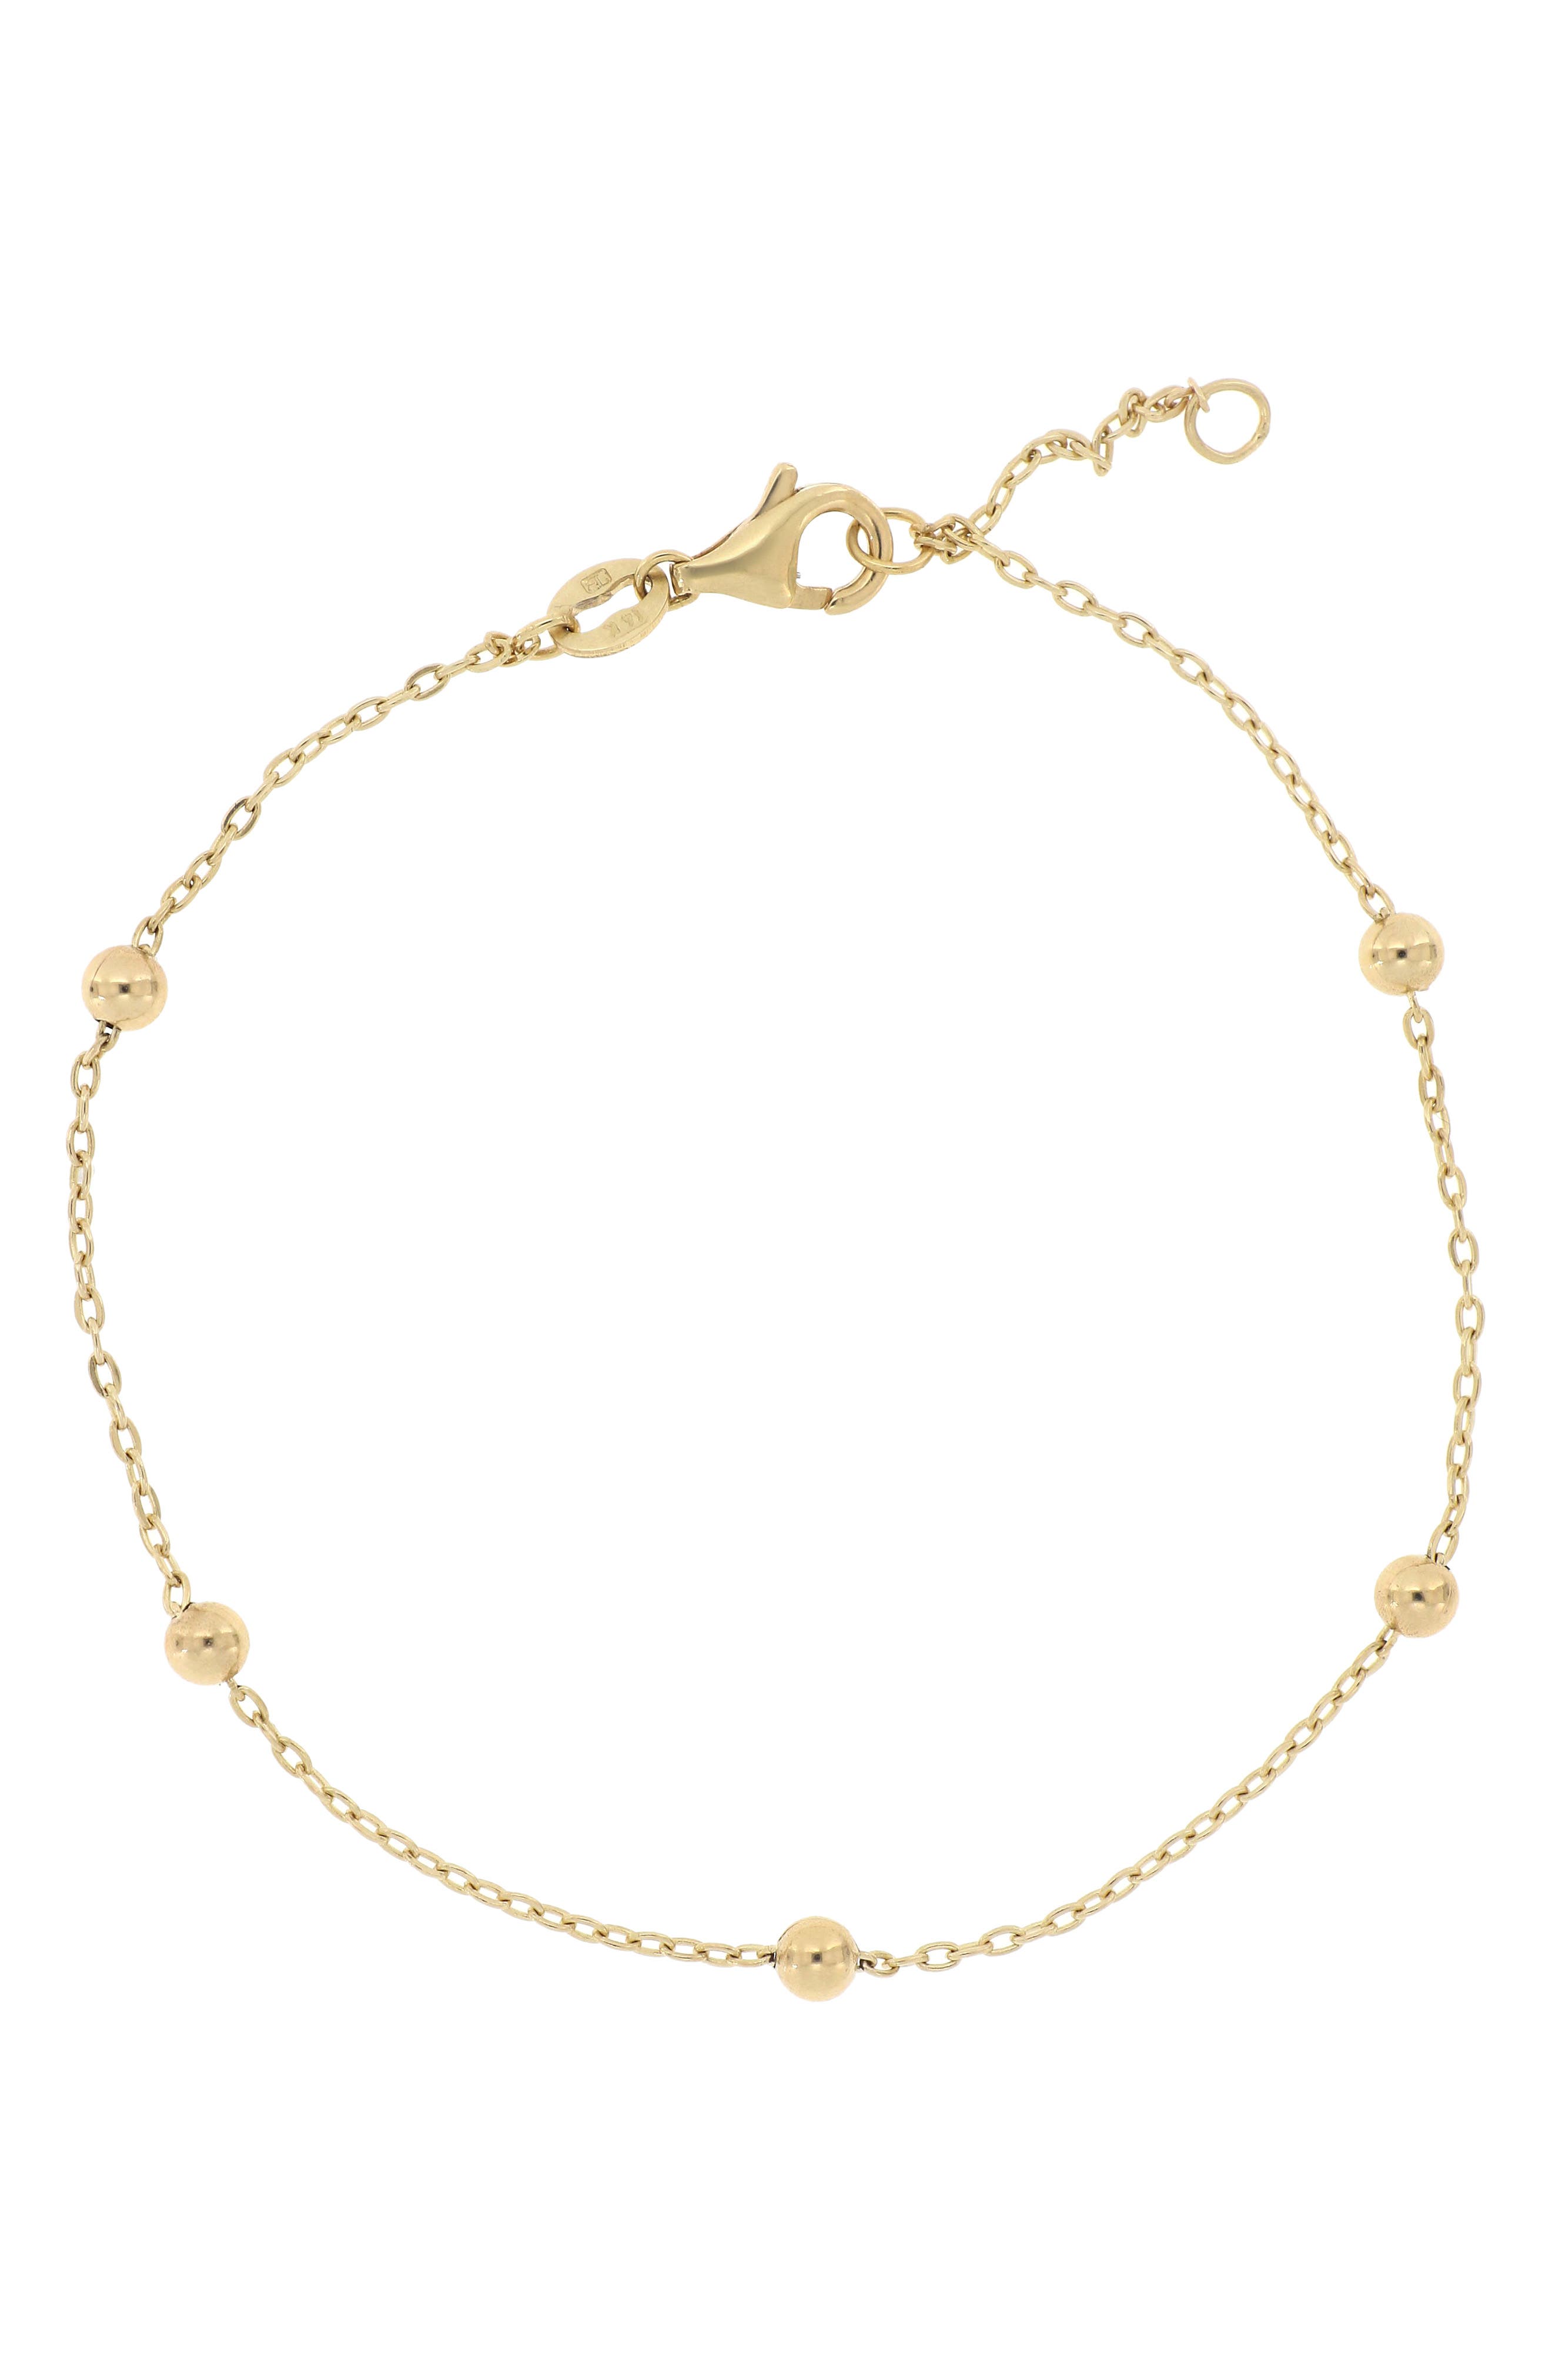 Real 14K White Gold CZ Bracelet Beads Small Pendant Charm 